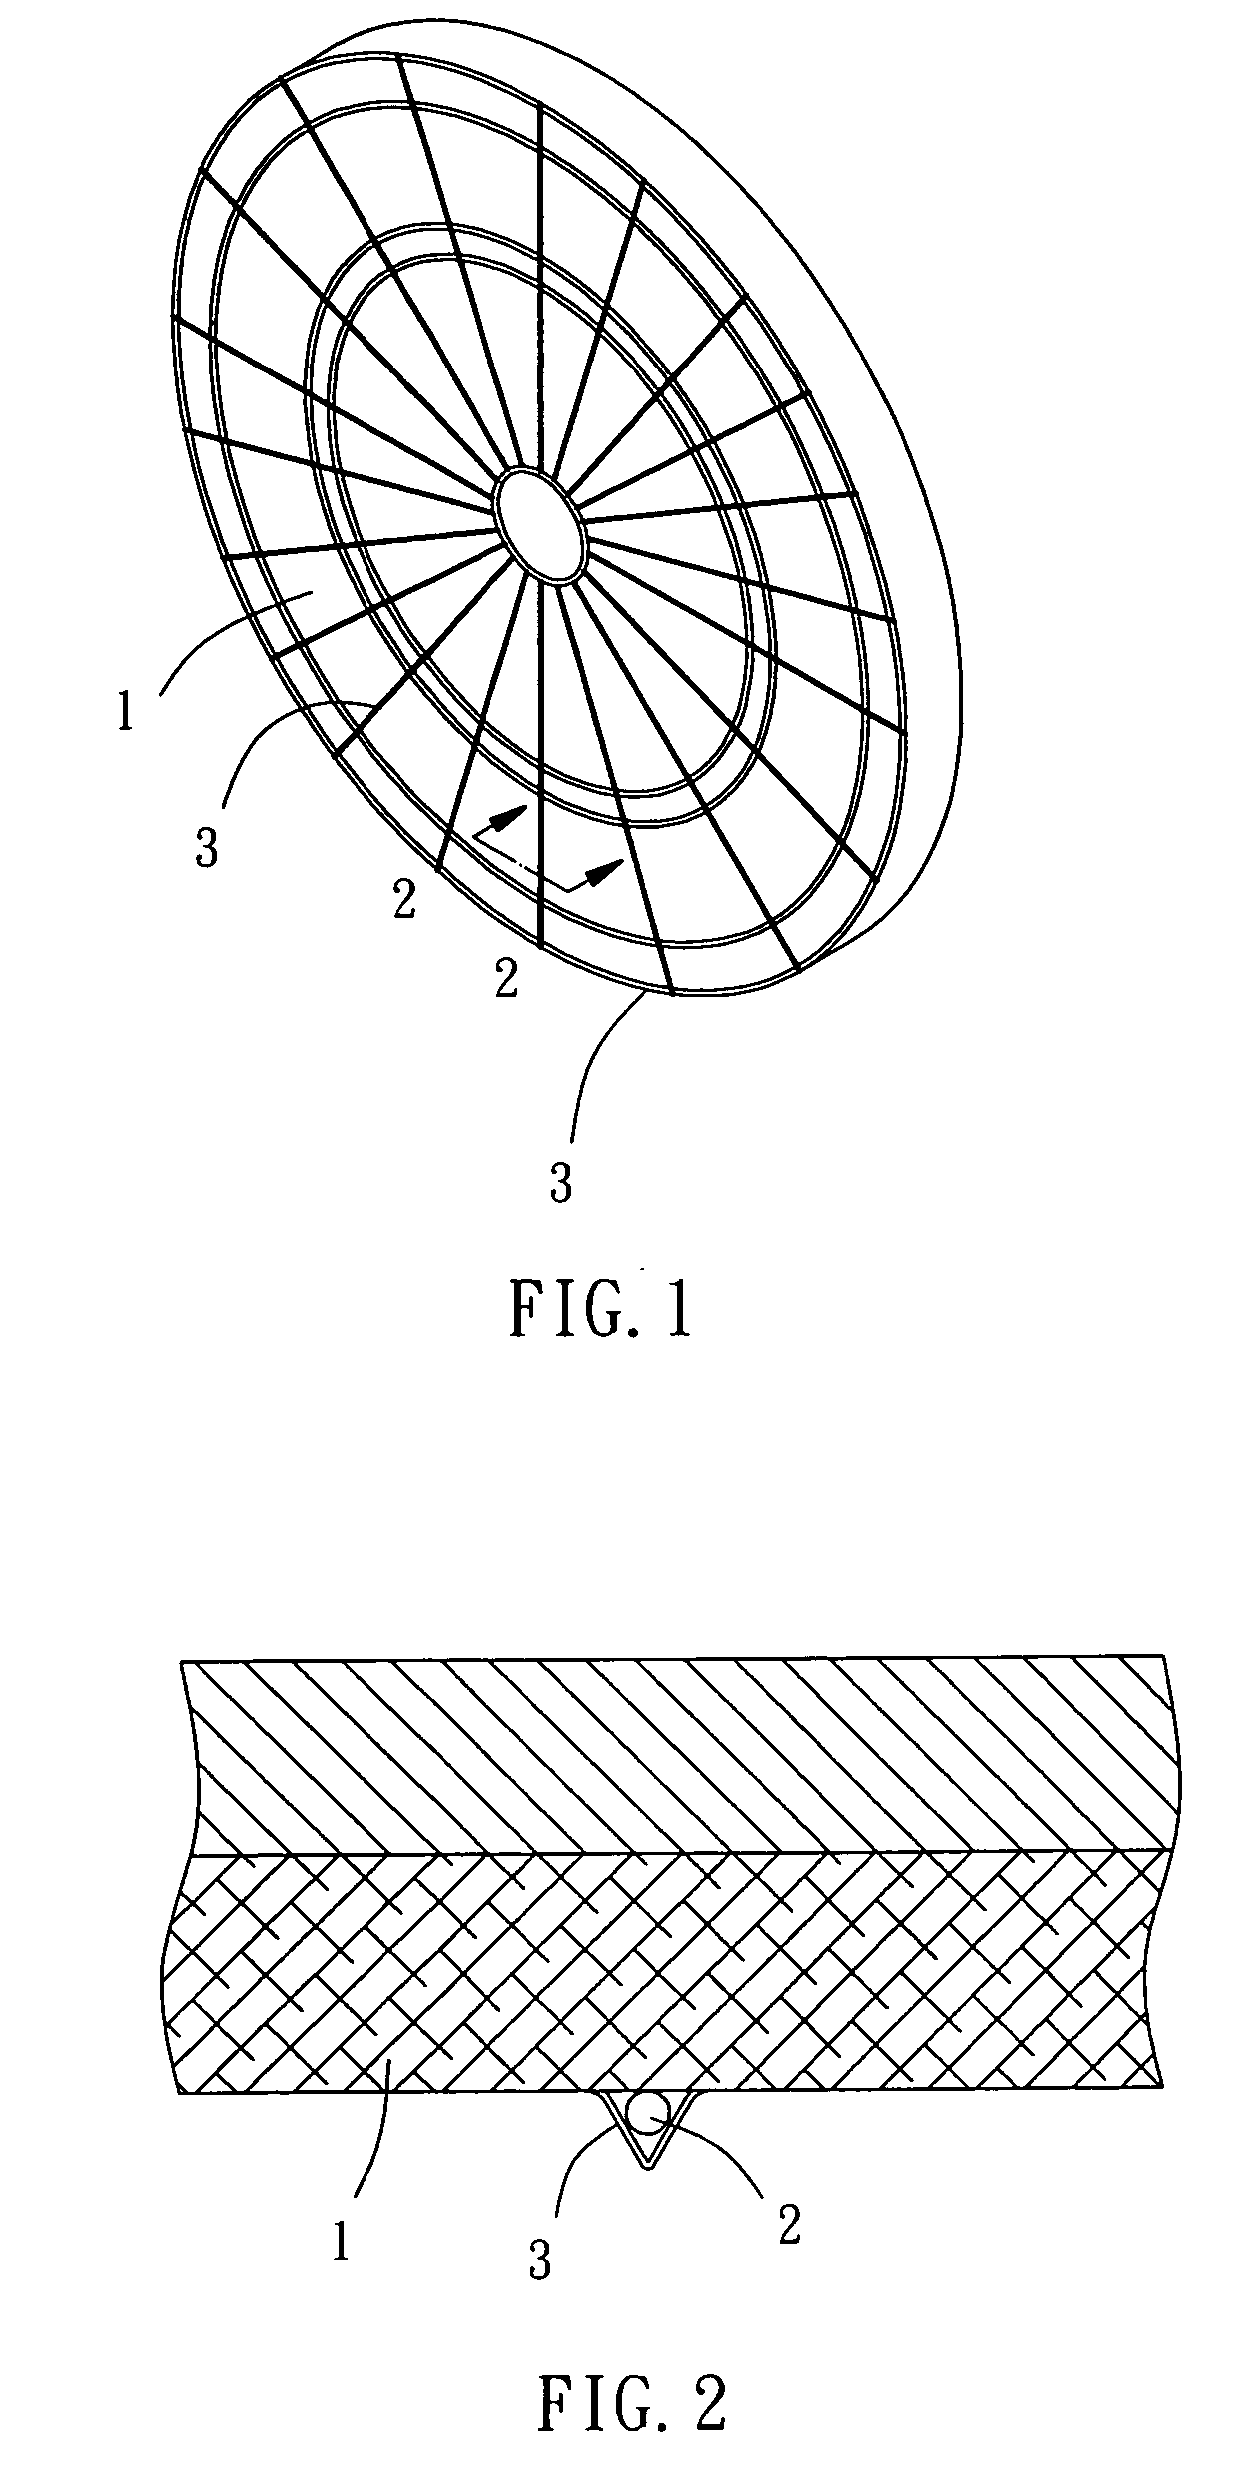 Print-type magnetic dartboard